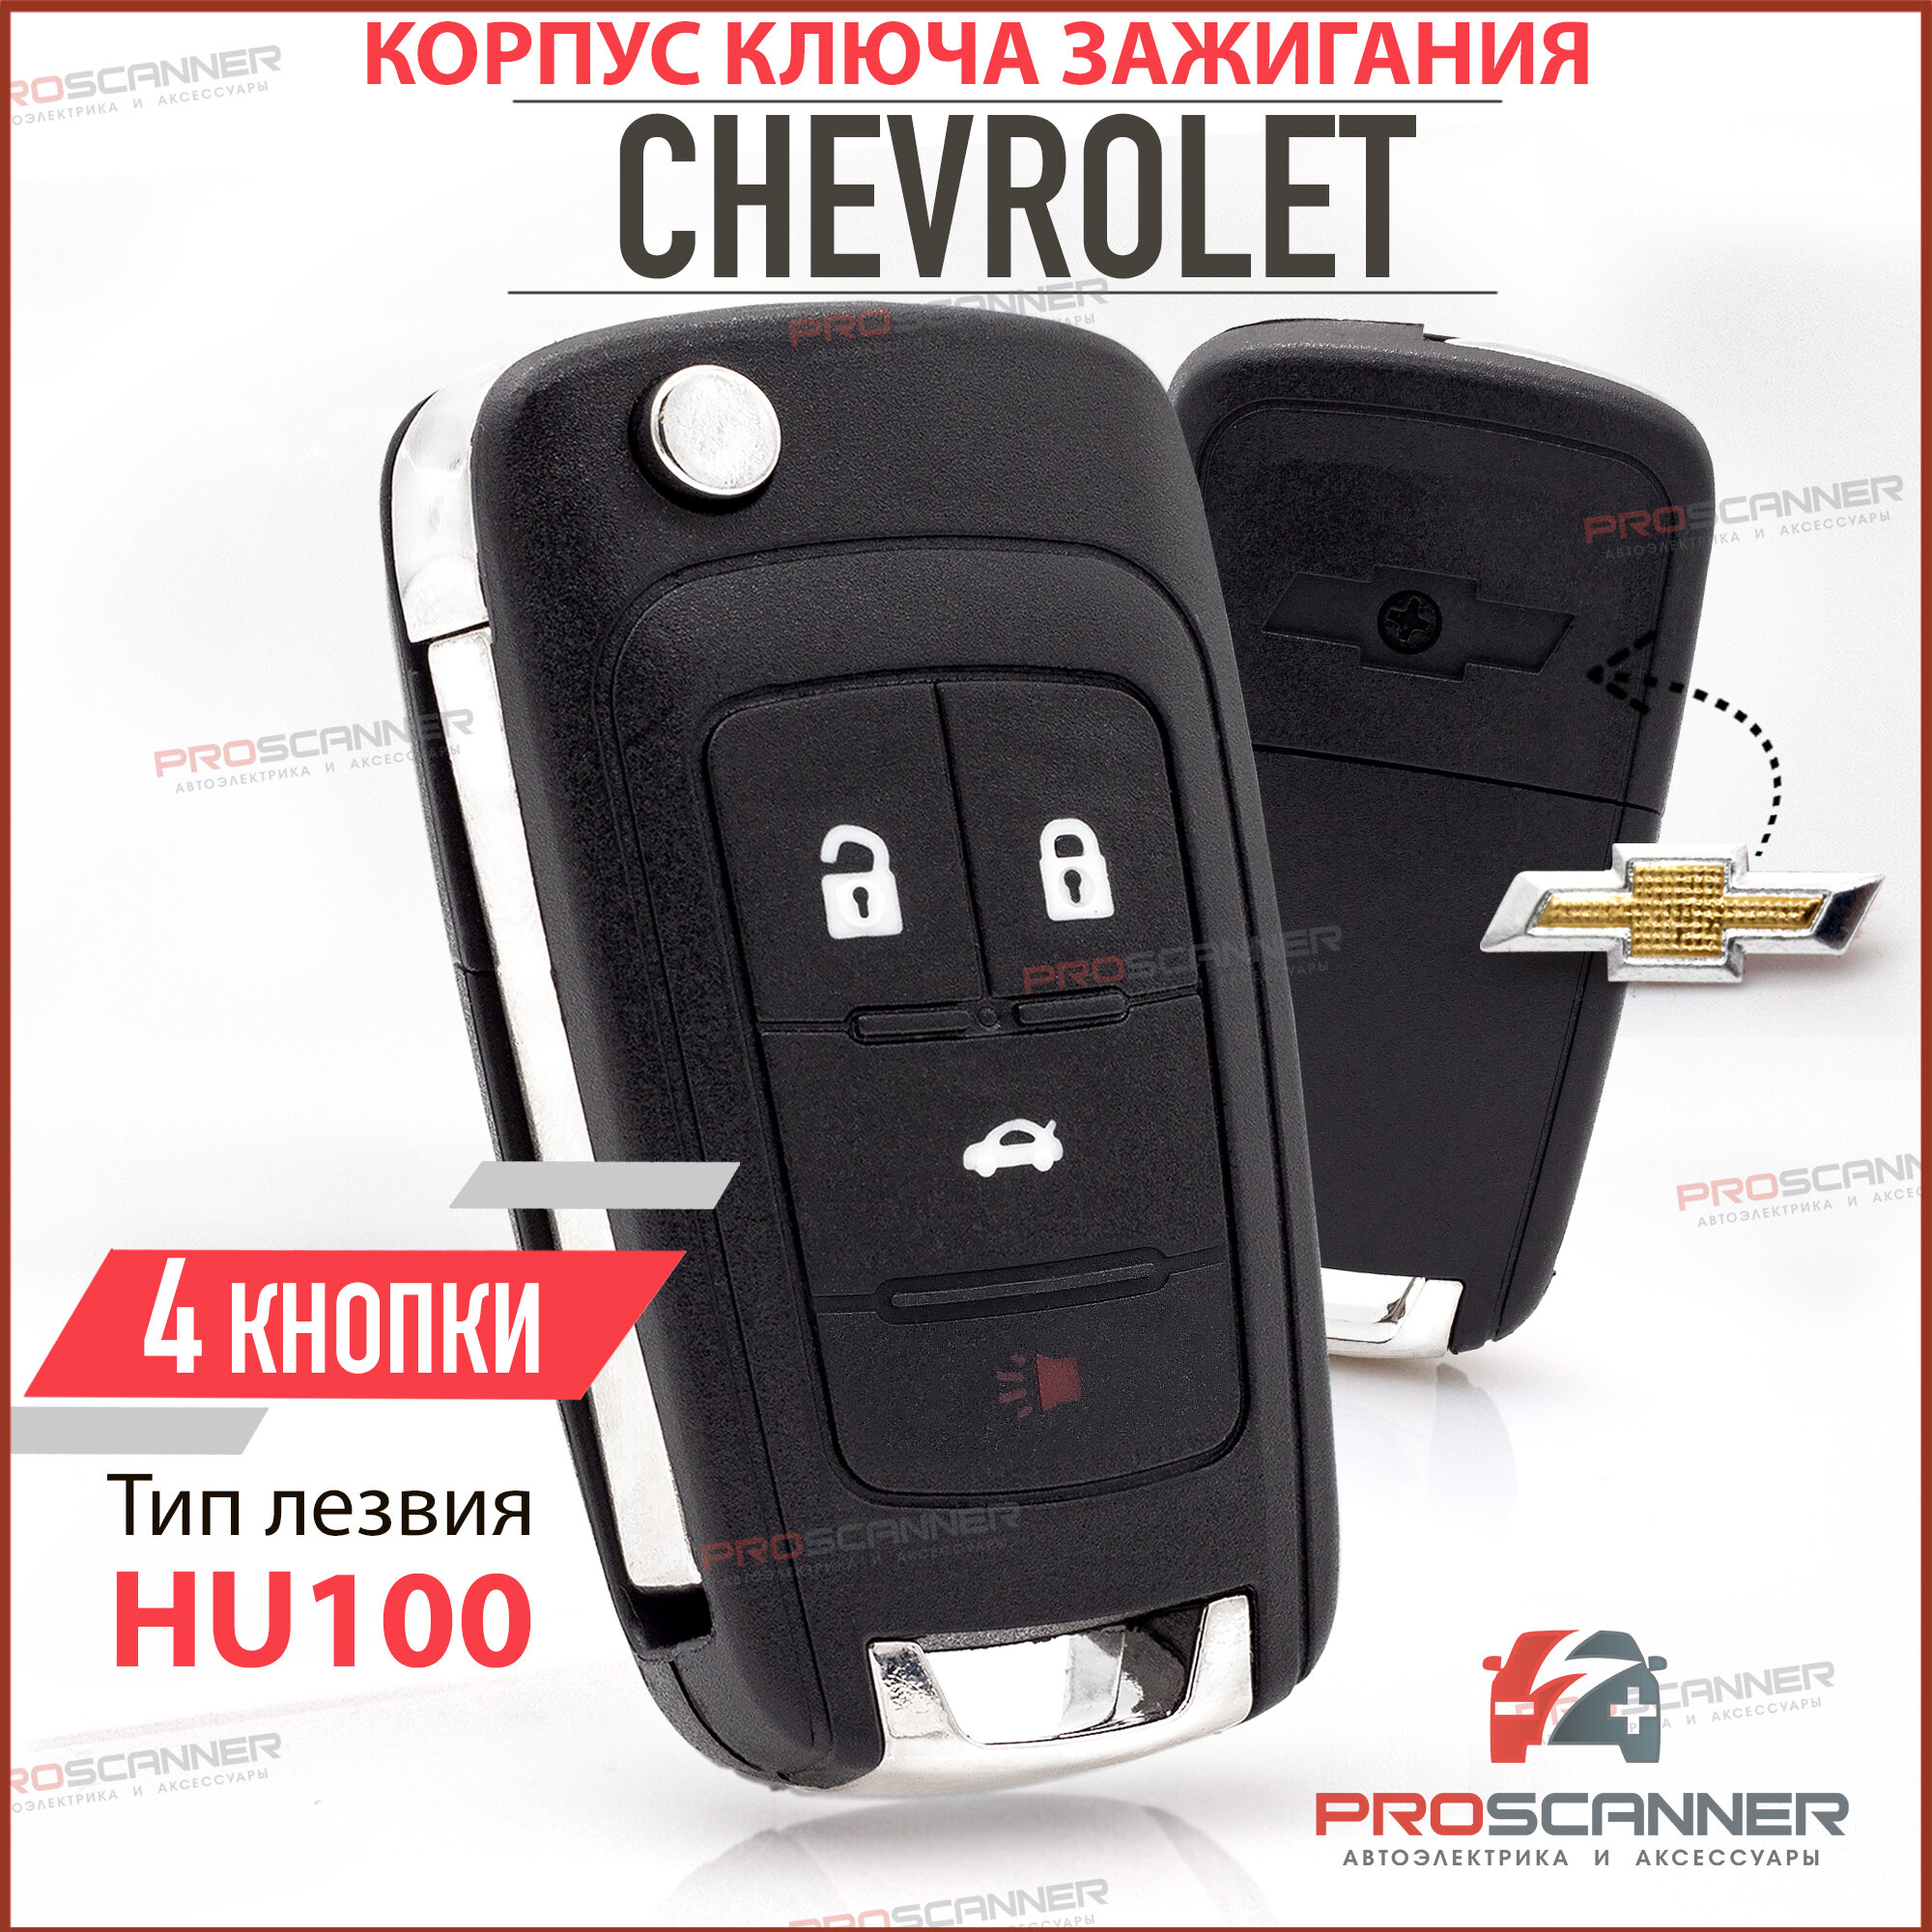 Корпус ключа зажигания для Chevrolet Cruze Aveo Orlando Шевроле / Круз Авео Орландо- 1 штука (4х кнопочный ключ, лезвие HU100)